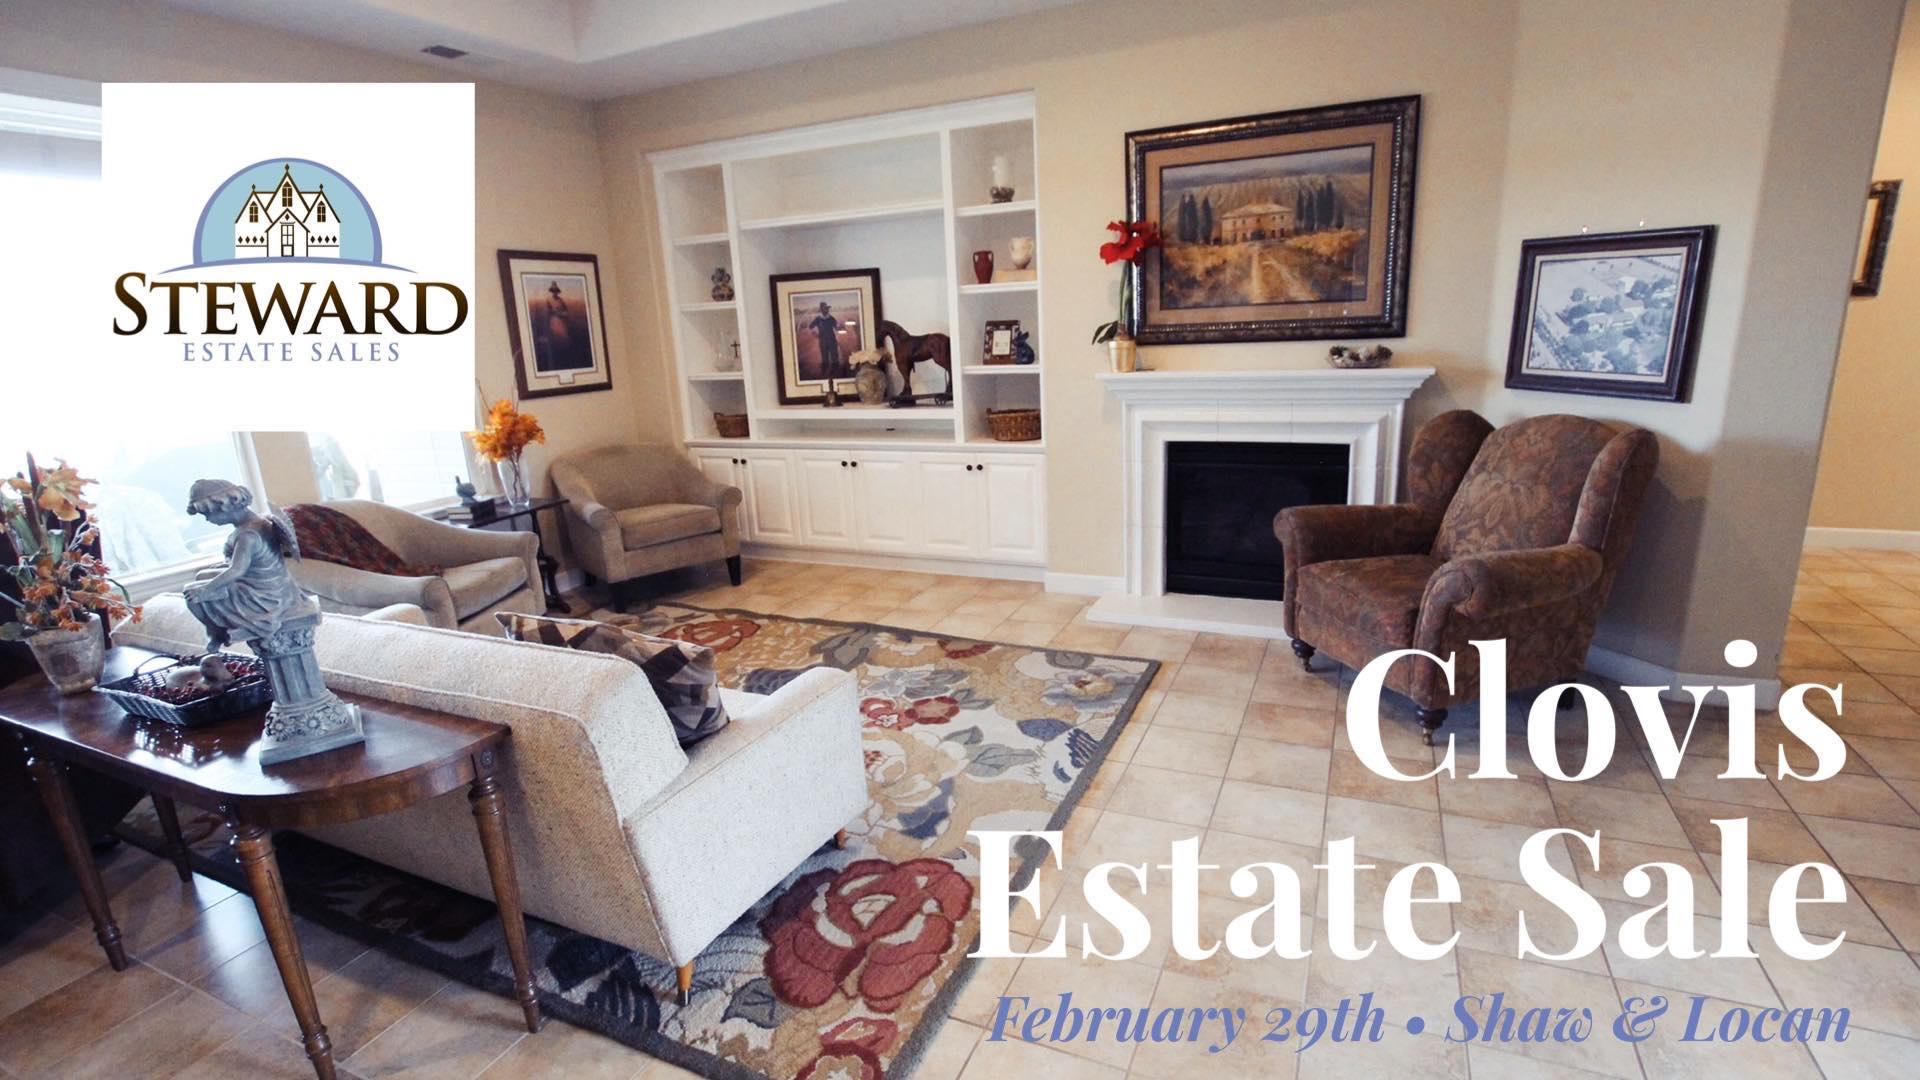 Exclusive Pre-Sell of Beautiful Clovis Estate Sale